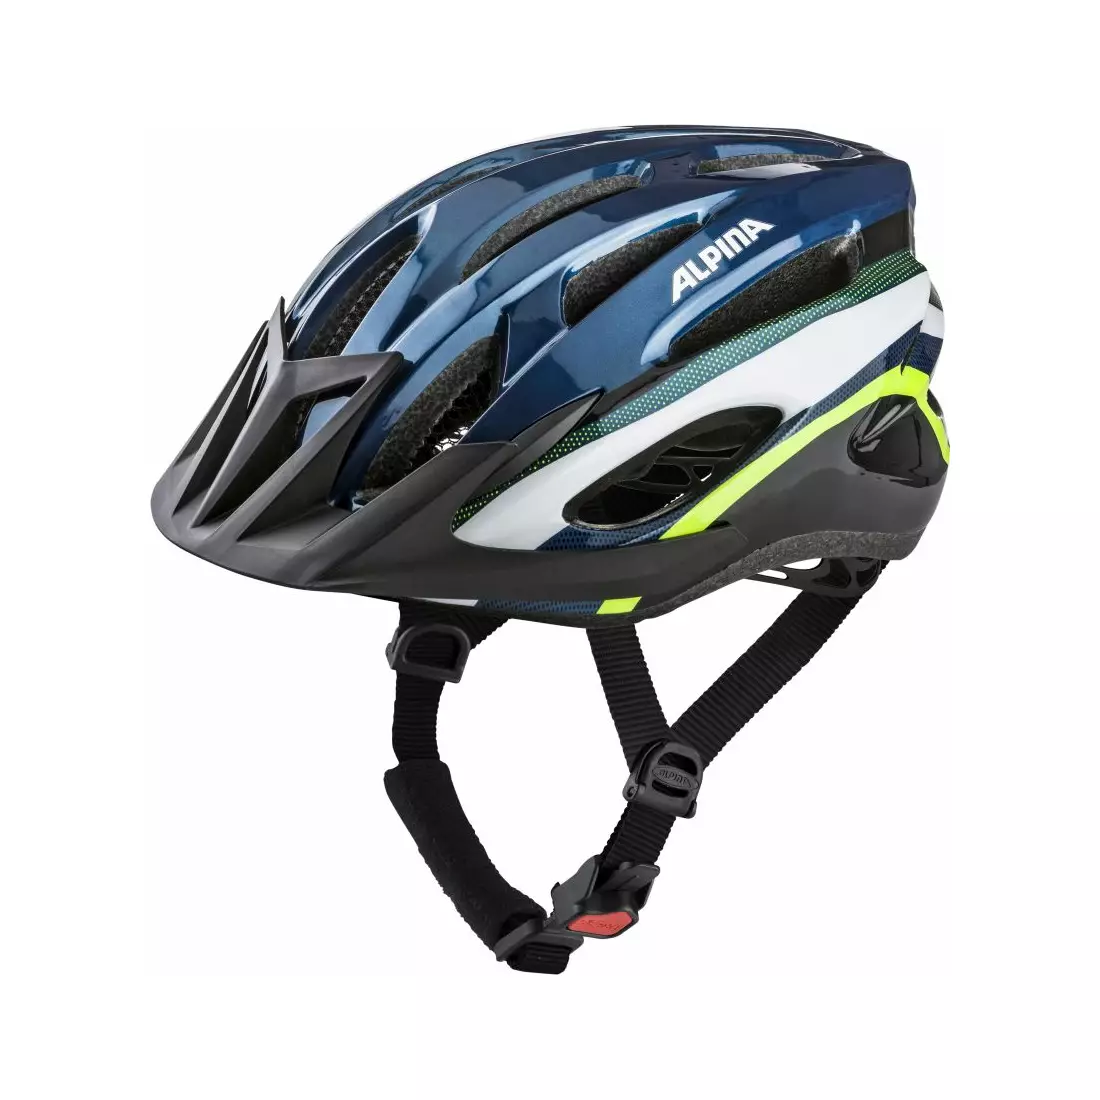 Bicycle helmet ALPINA MTB17 DARKBLUE-NEON 